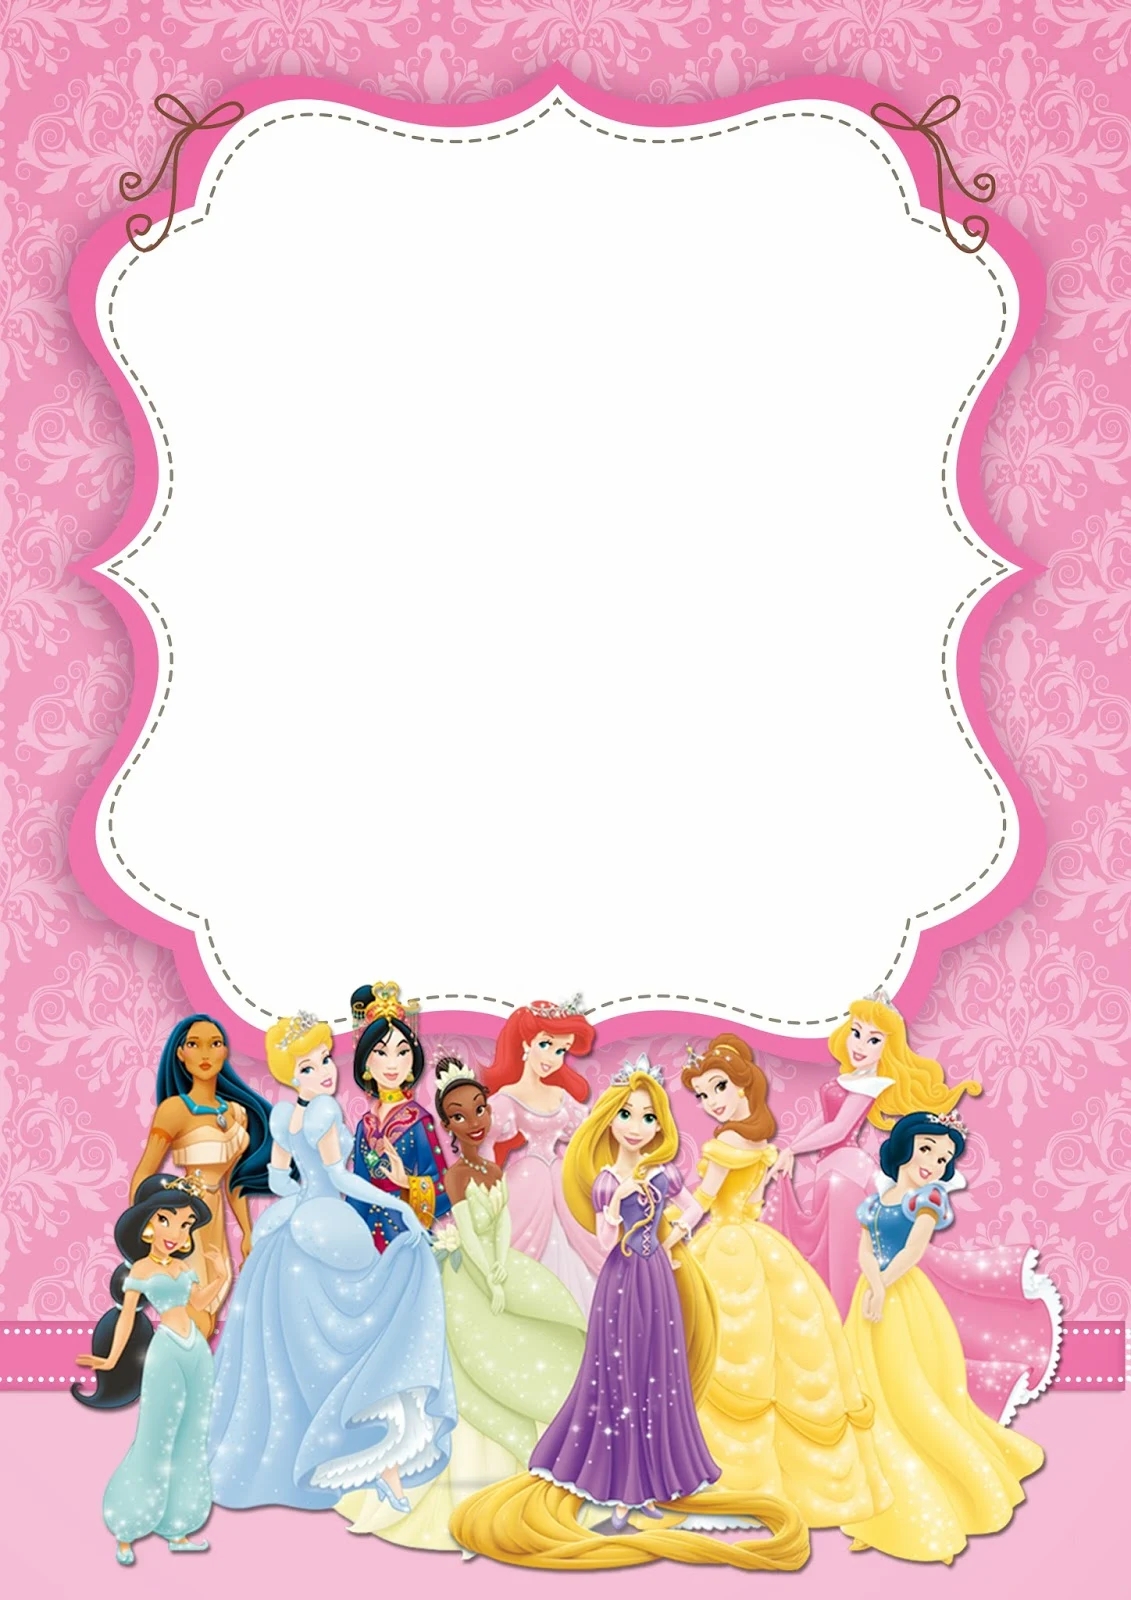 Disney Princess Party Free Printable Party Invitations Oh My Fiesta In English - Disney Princess Birthday Invitations Free Printable